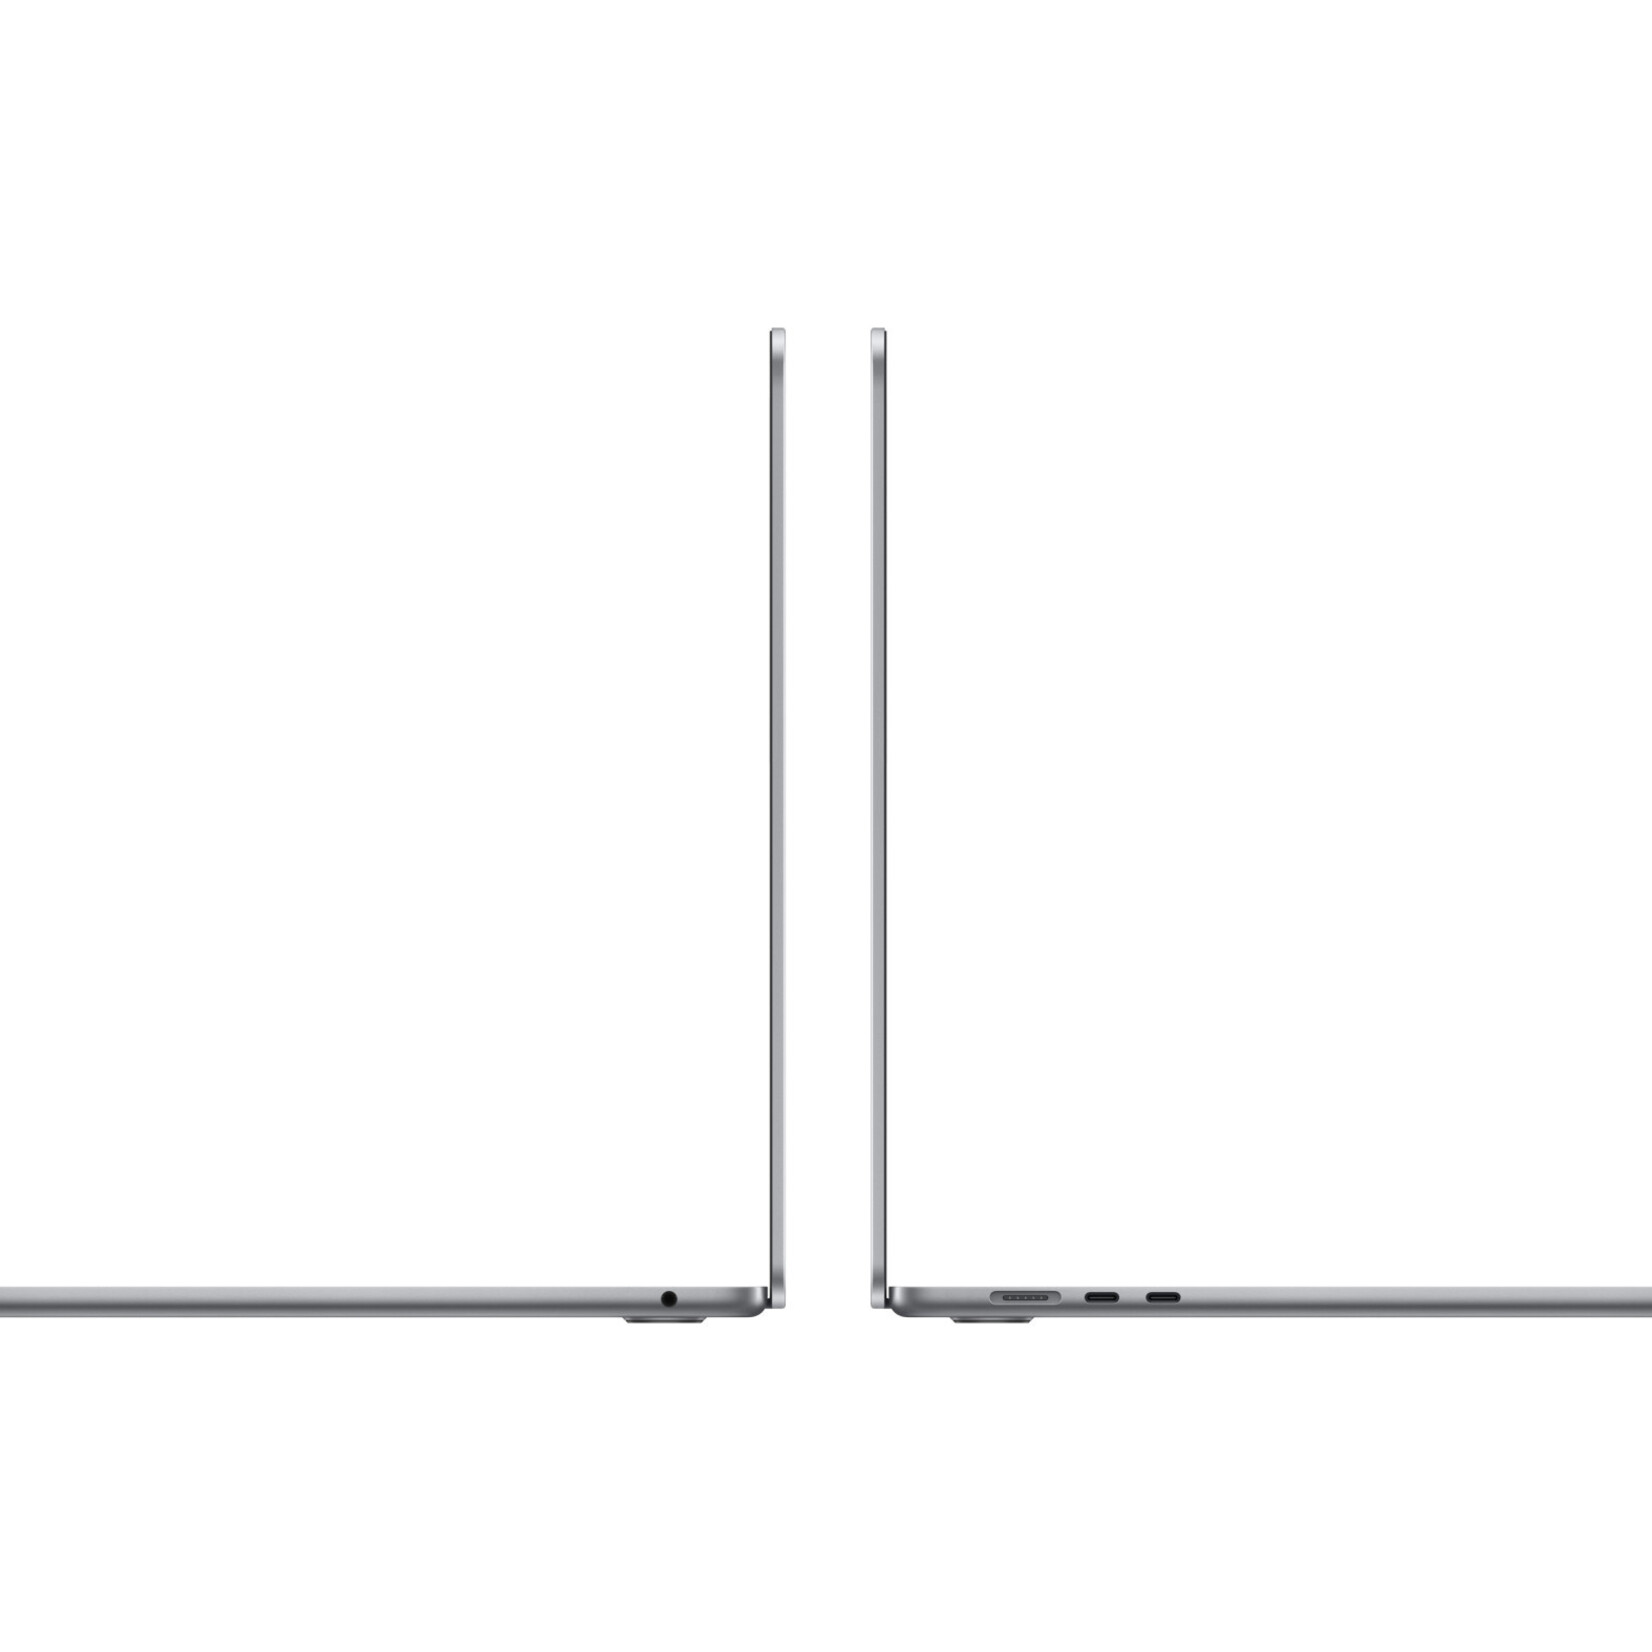 Apple 15-inch MacBook Air -  M2 Chip - 512GB - Space Gray